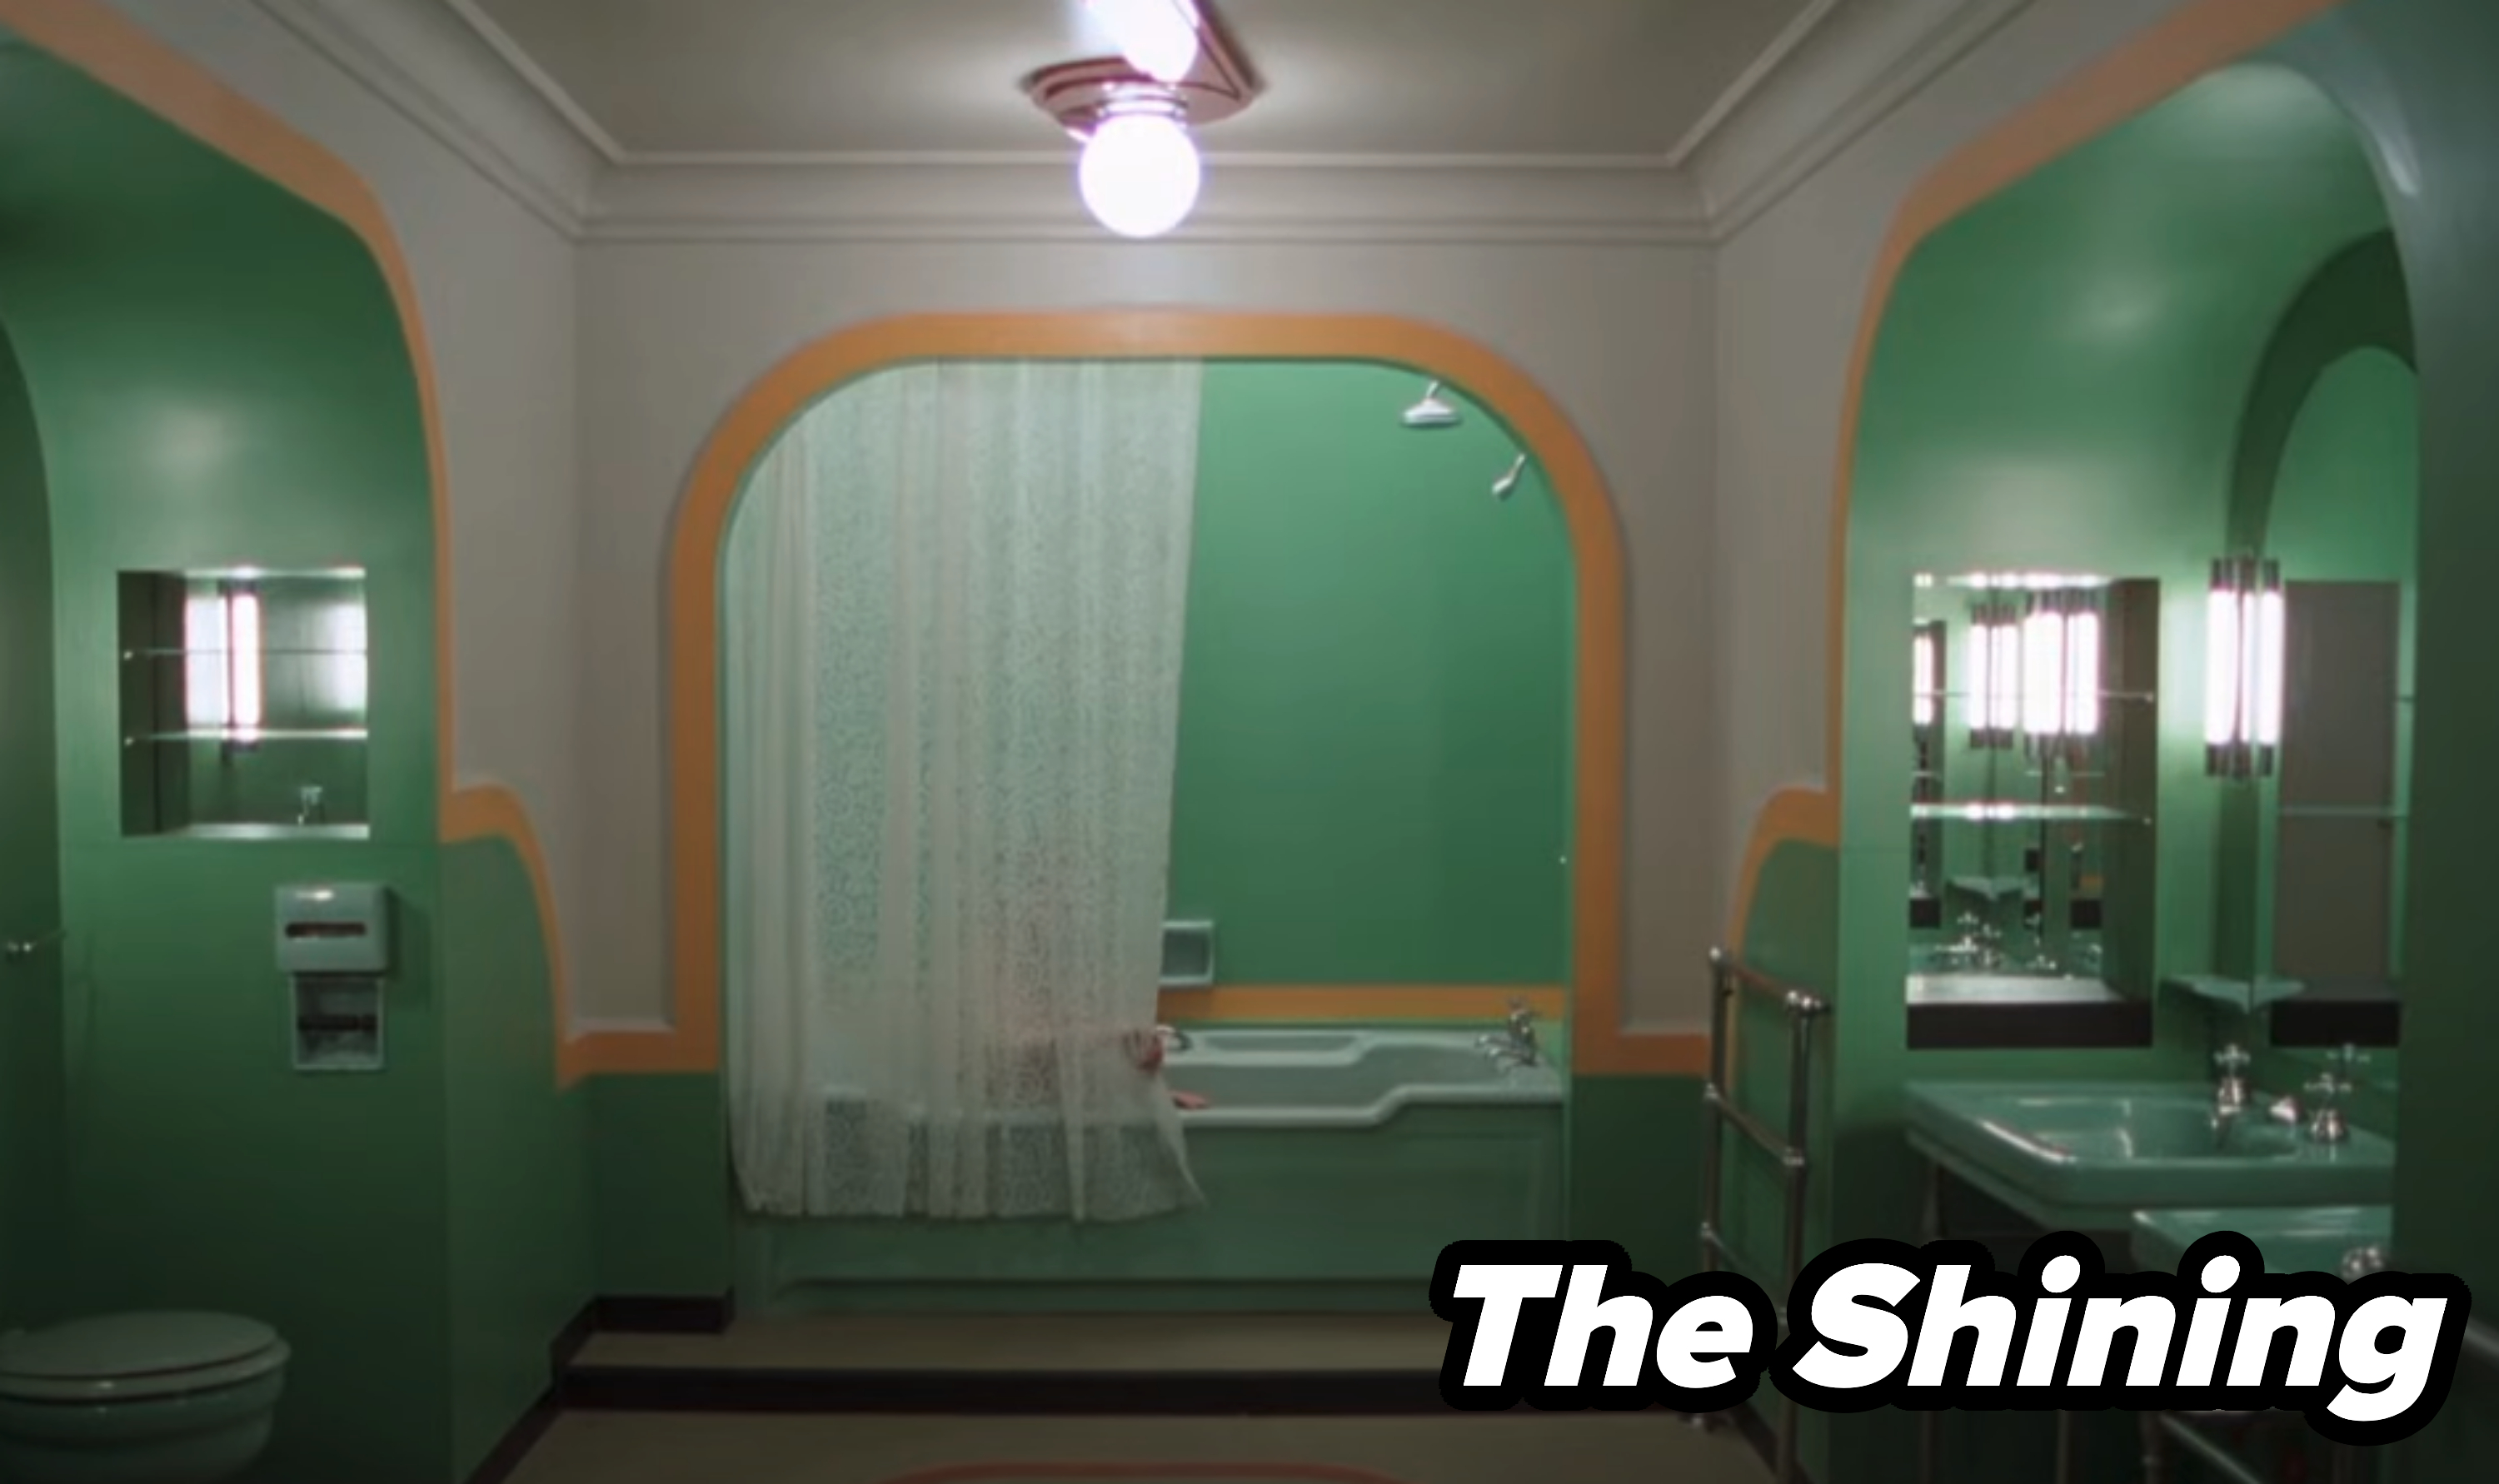 Original scene from The Shining where the woman draws the bathtub curtain